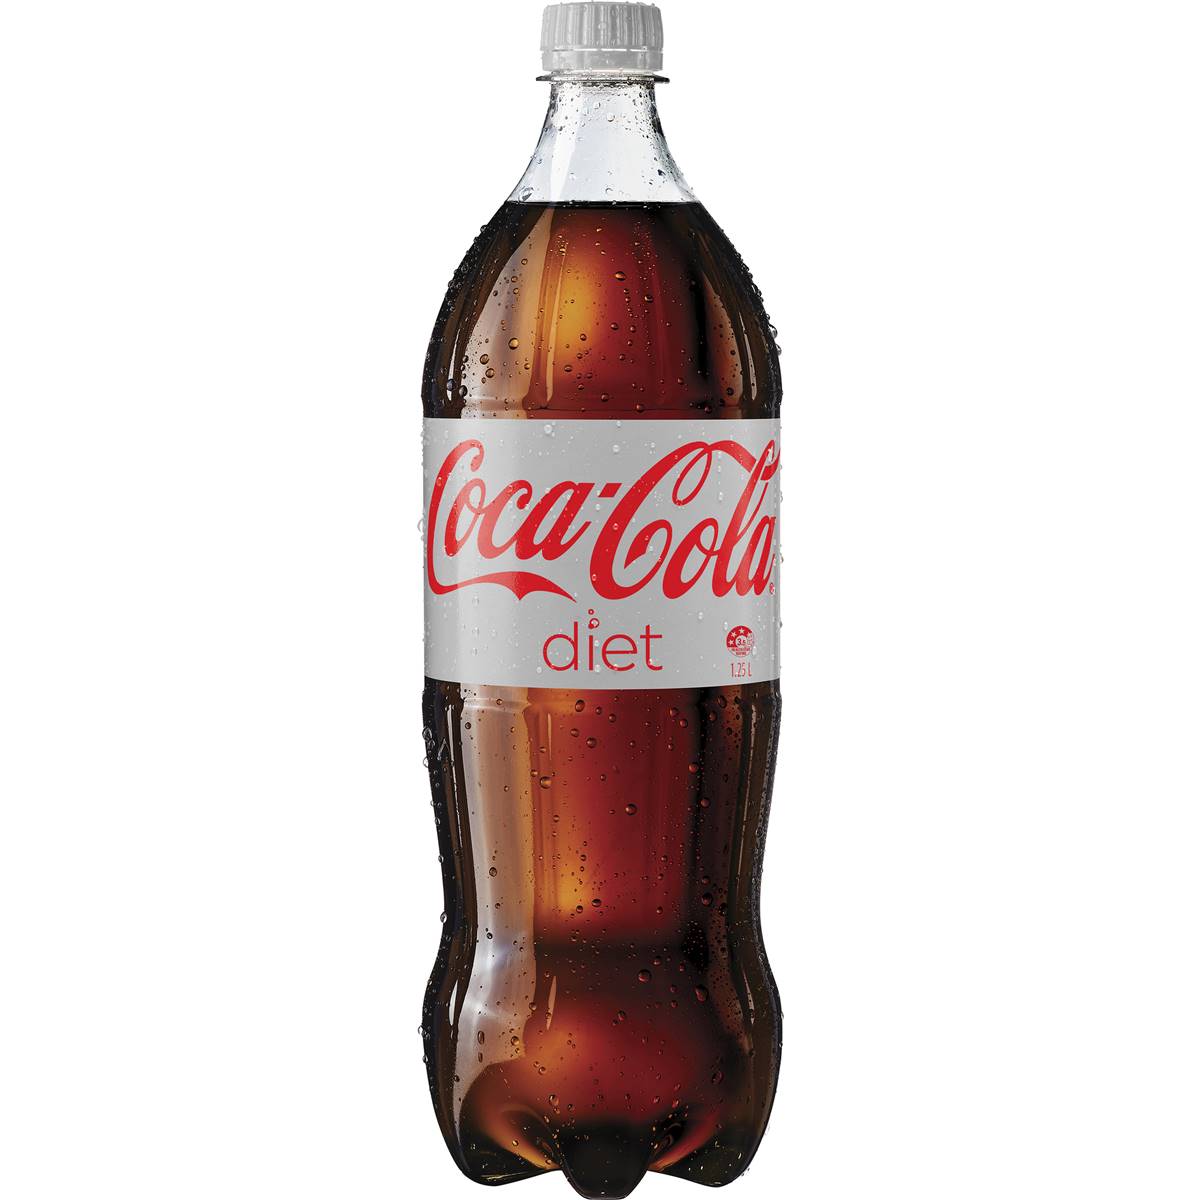 Calories in Coca-cola Light/diet Coke Diet Bottle